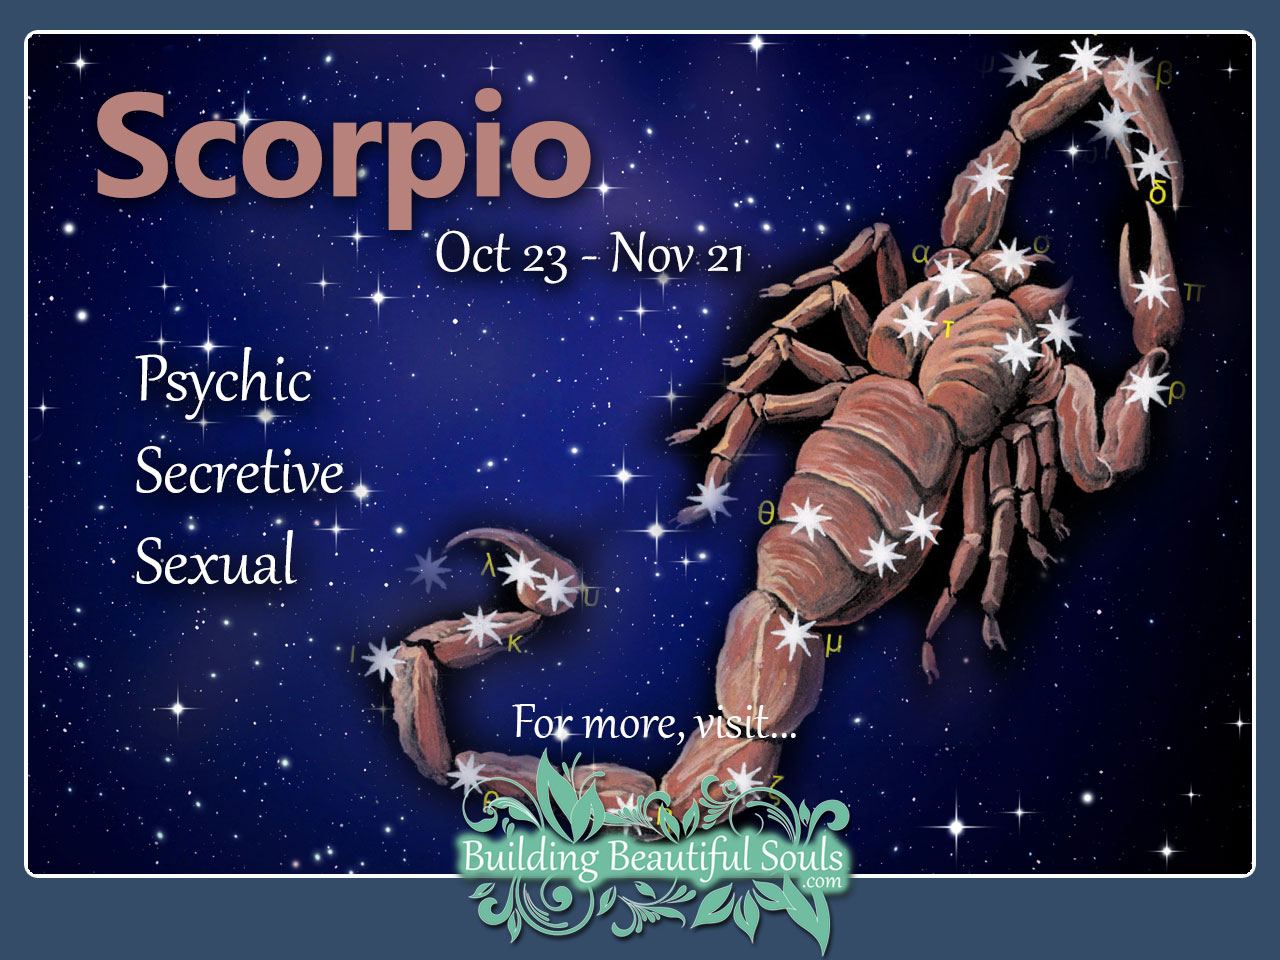 Scorpios dating Scorpios zodiac